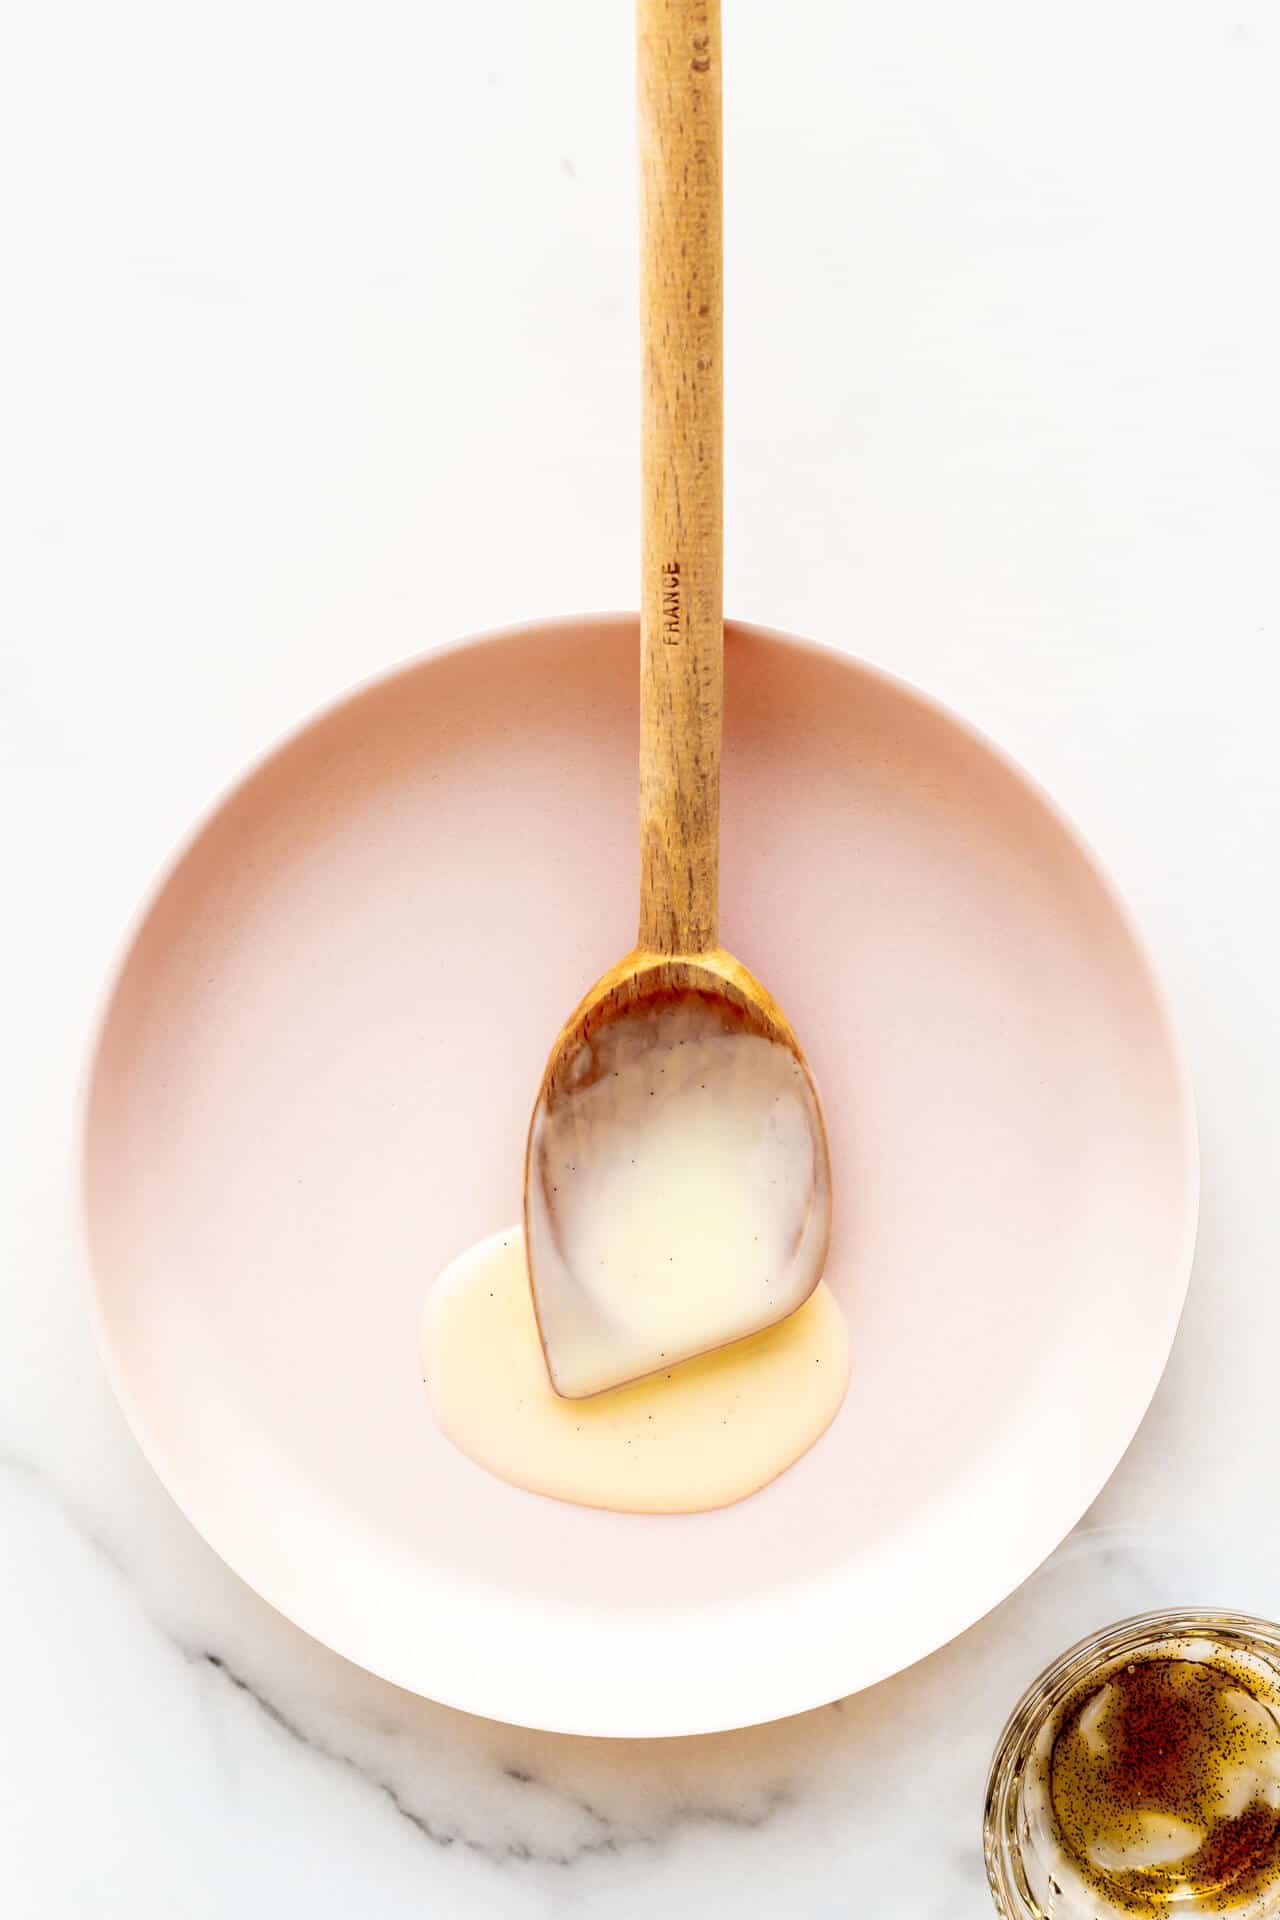 https://bakeschool.com/wp-content/uploads/2021/01/Thick-homemade-cre%CC%80me-anglaise-or-vanilla-custard-sauce.jpg